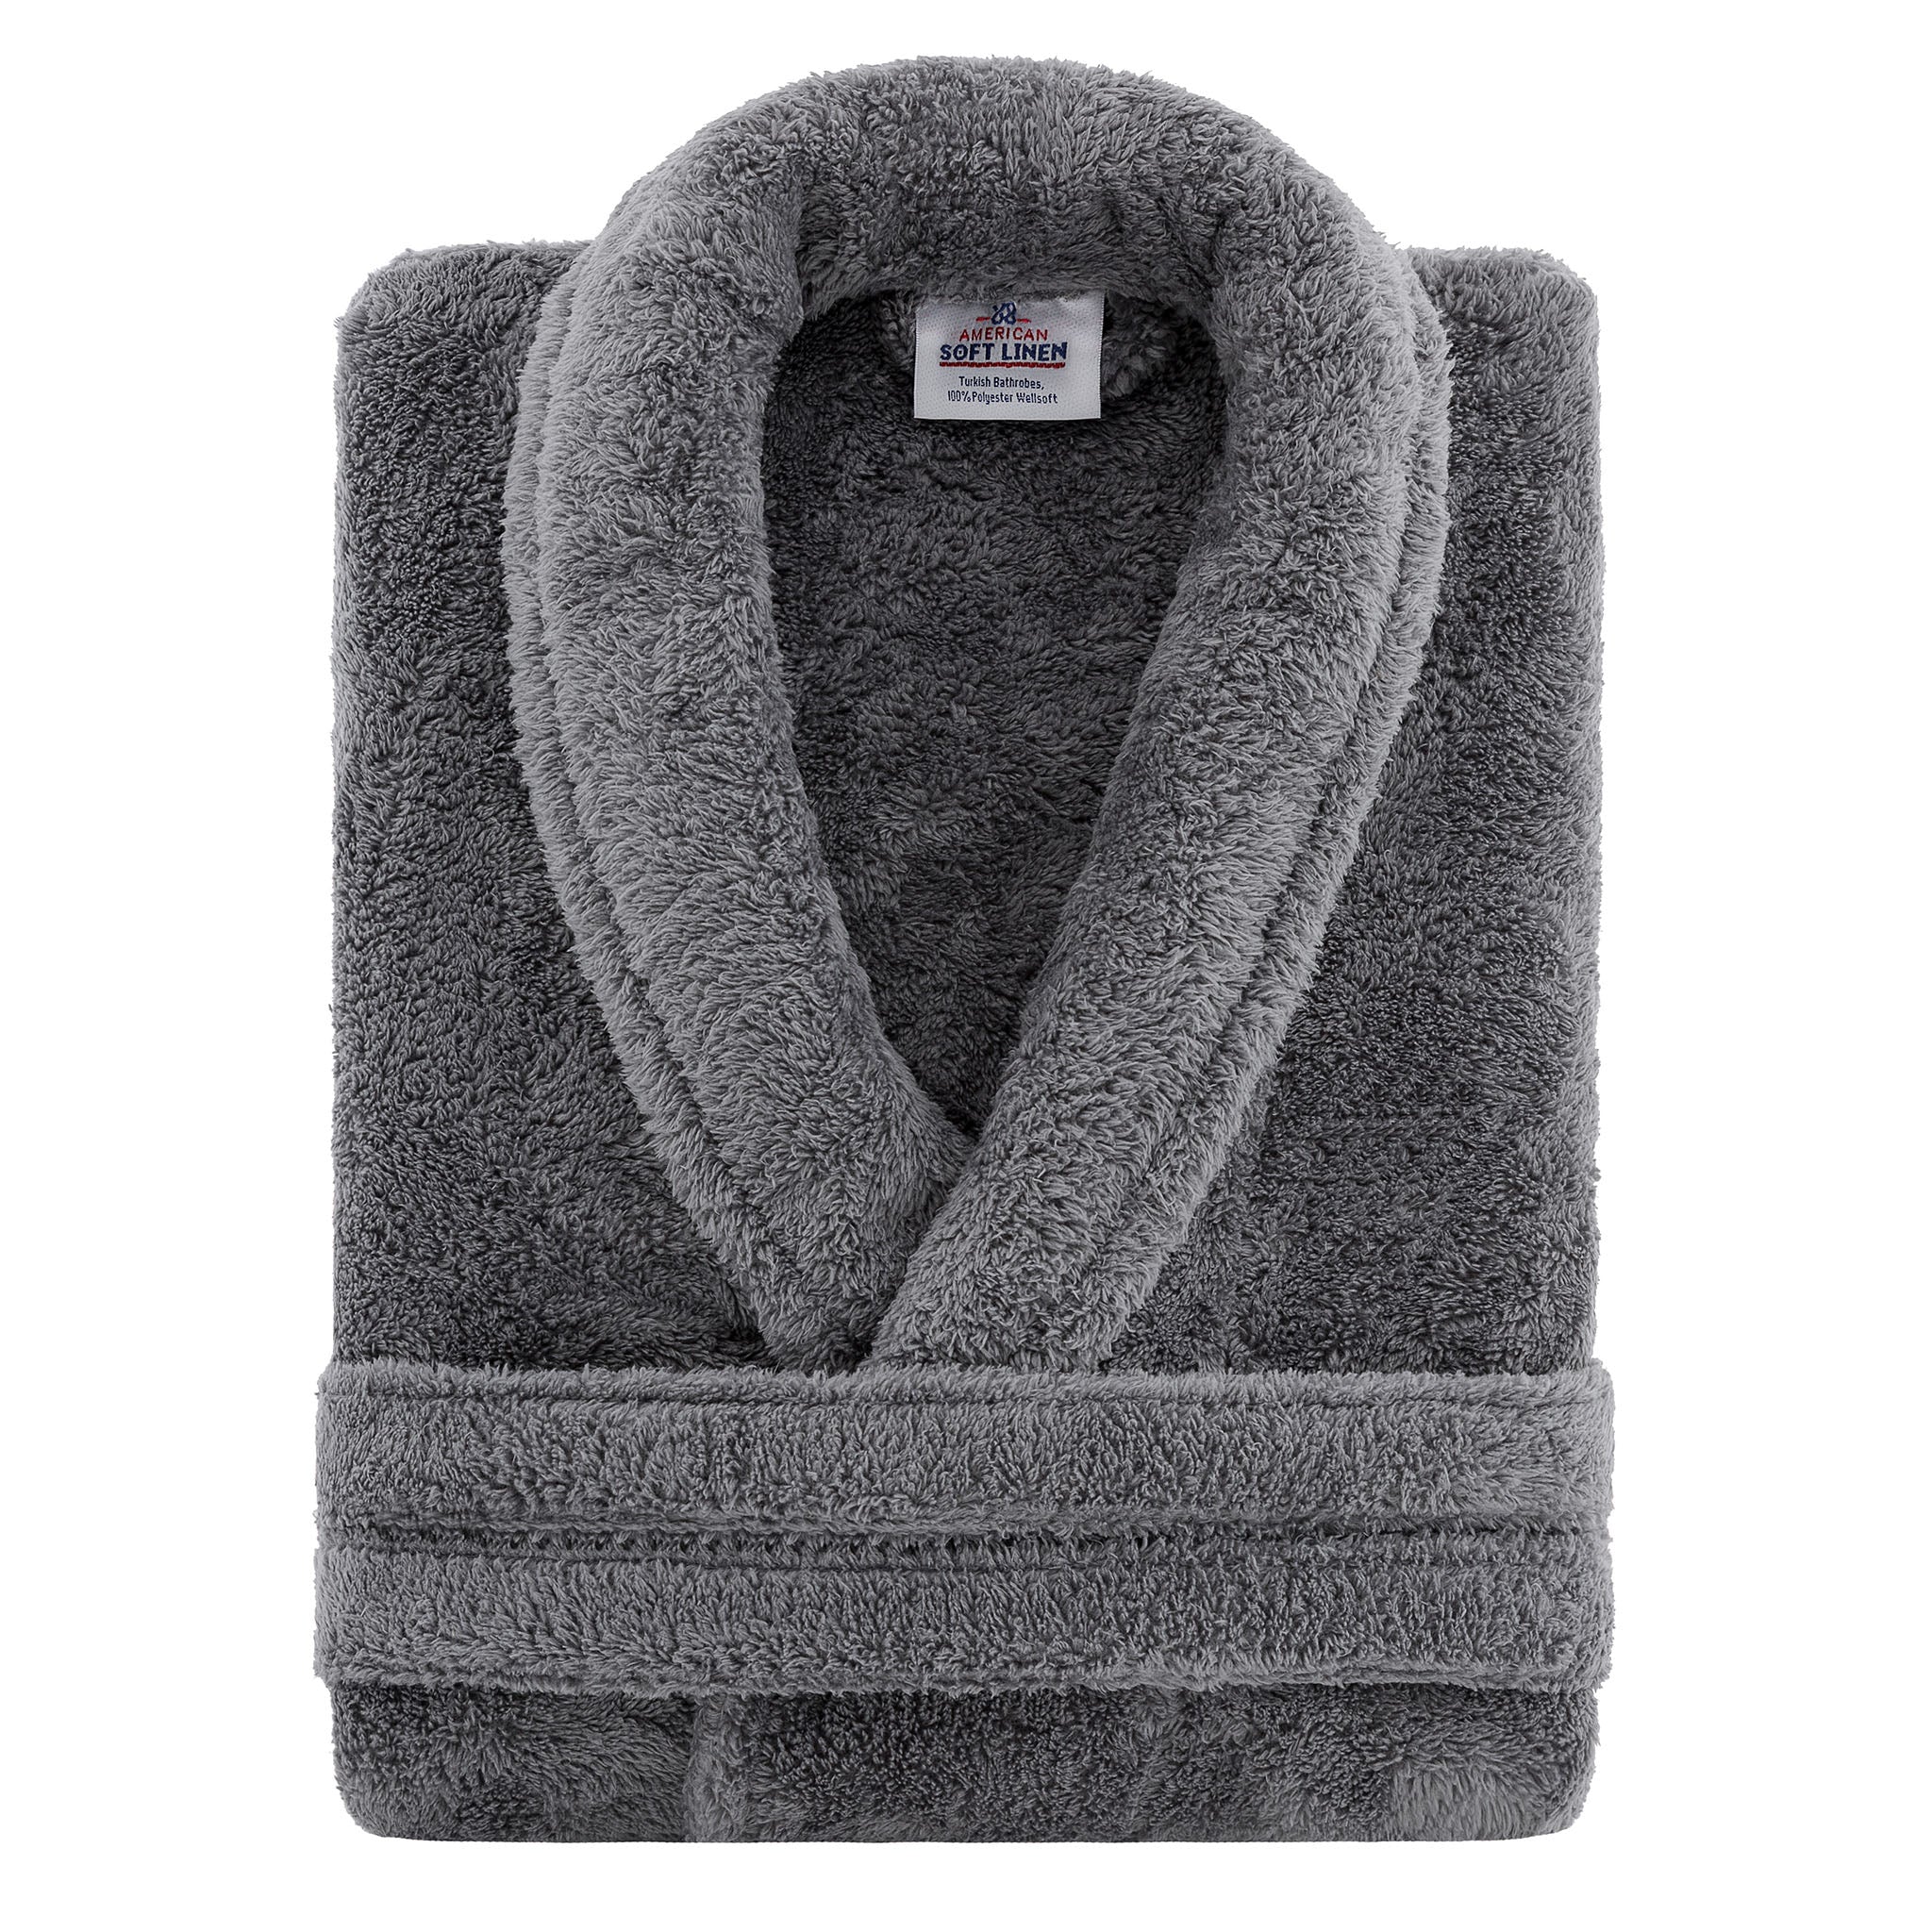 American Soft Linen Super Soft Absorbent and Fluffy Unisex Fleece Bathrobe -12 Set Case Pack -M-L-gray-3